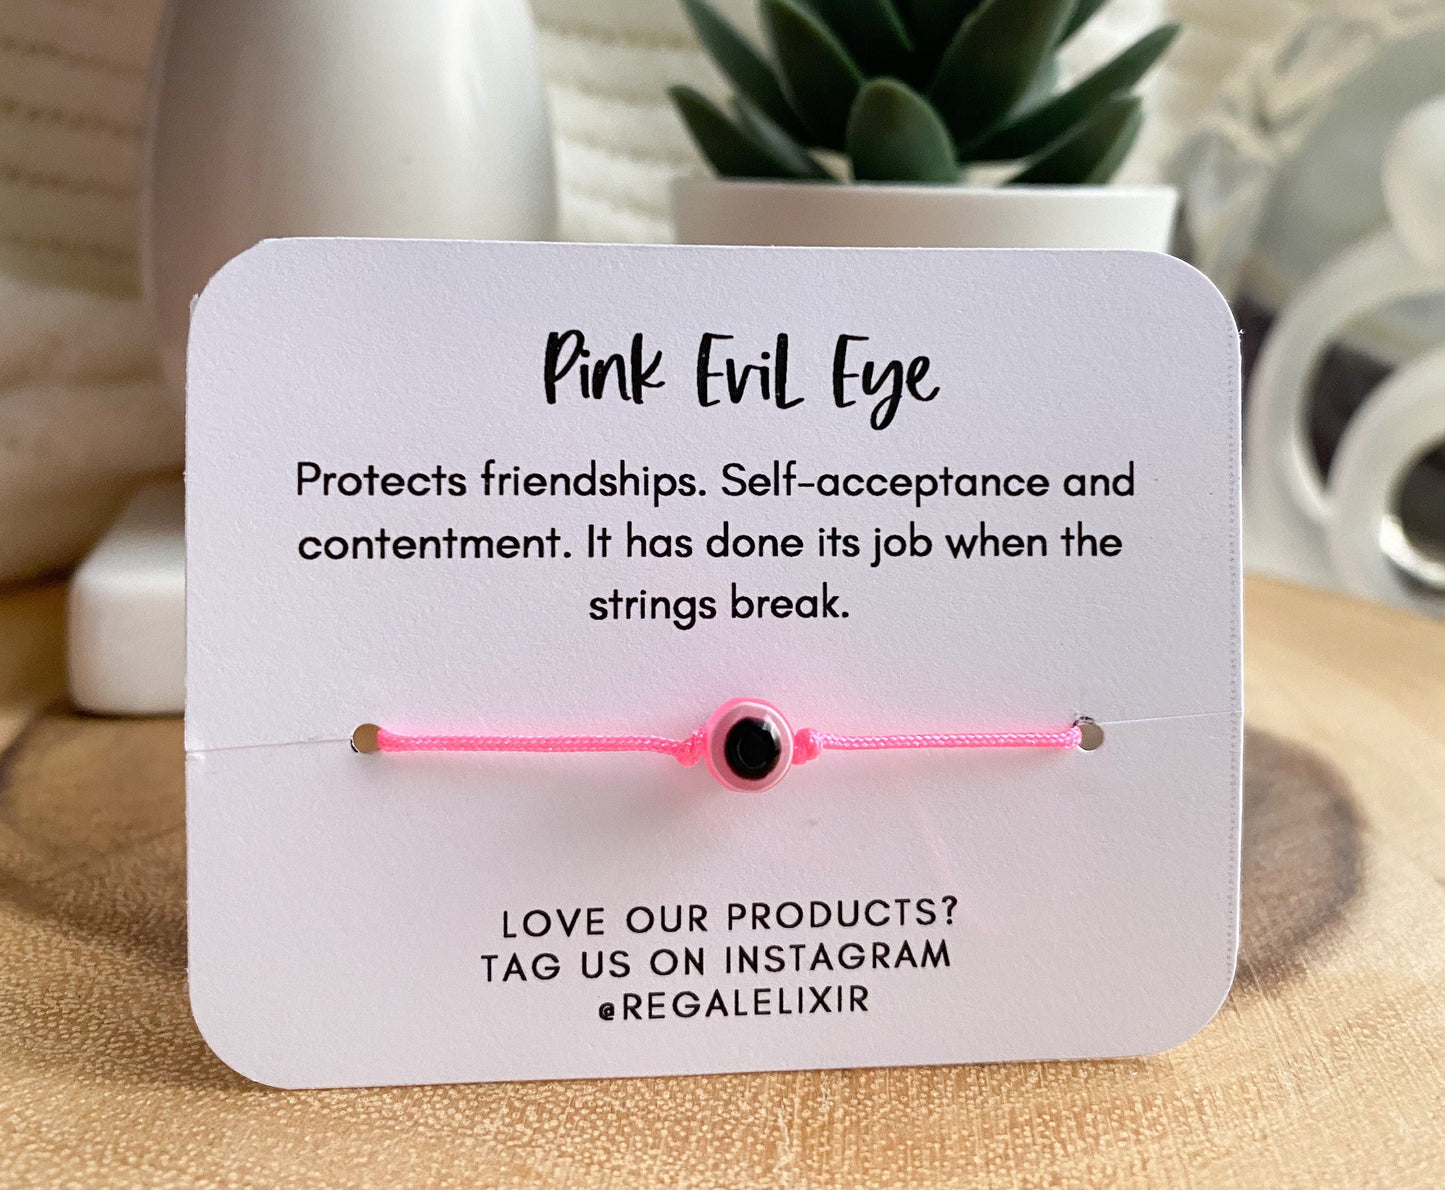 PINK Evil eye bracelet Hot Pink  Nazar  Mal de ojo  adjustable  pulsera roja  protection  Protect Friendships Bridesmaid present